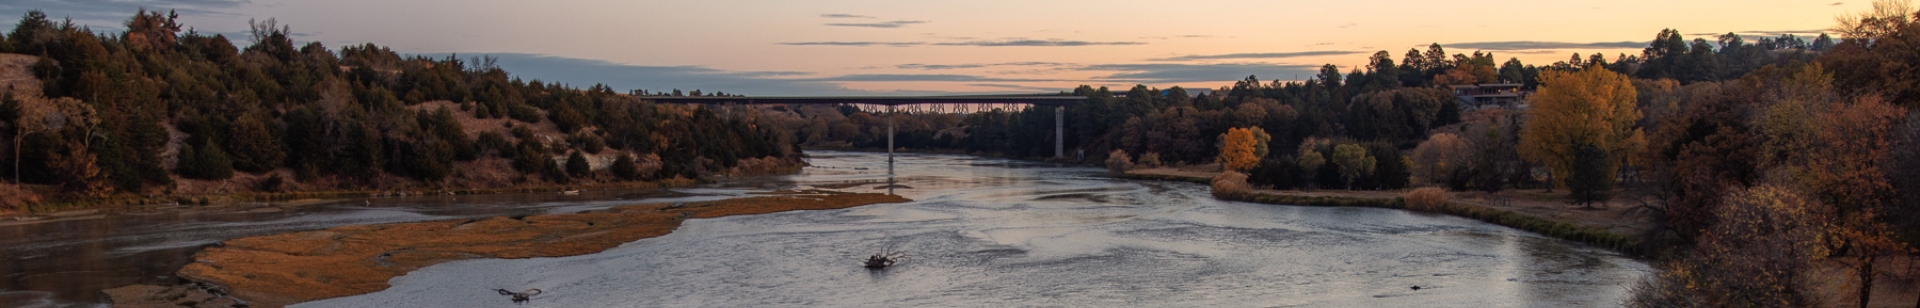 Niobrara River at Sunrise from Bryan Bridge